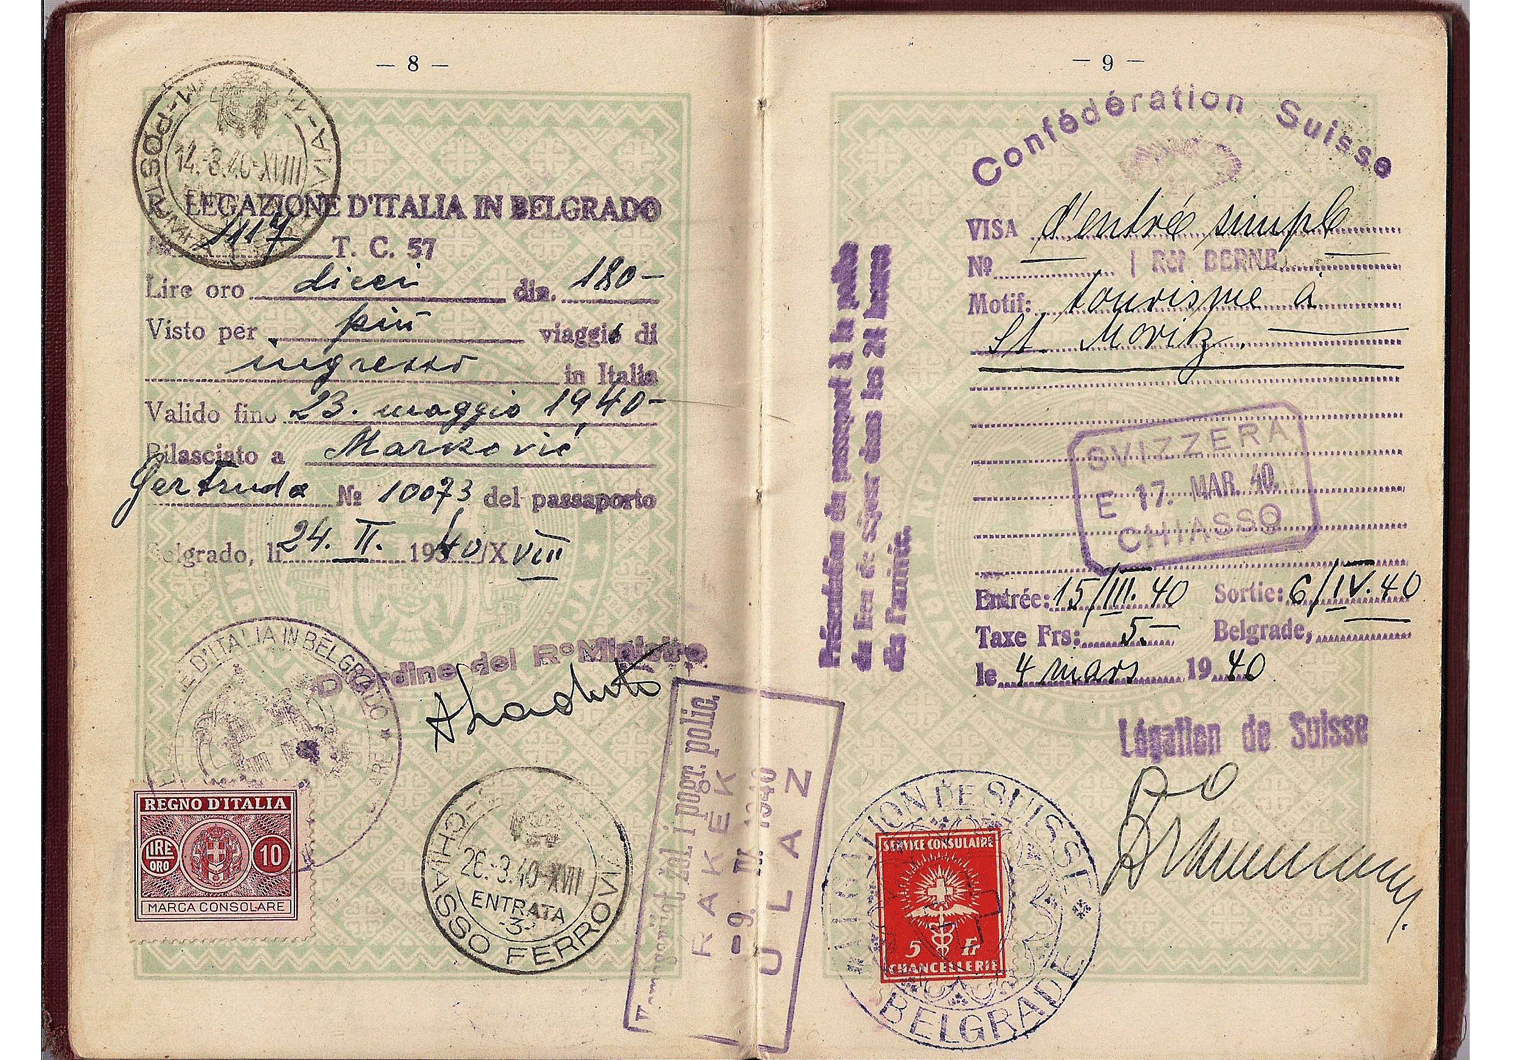 1944 Budapest - life saving passport extension